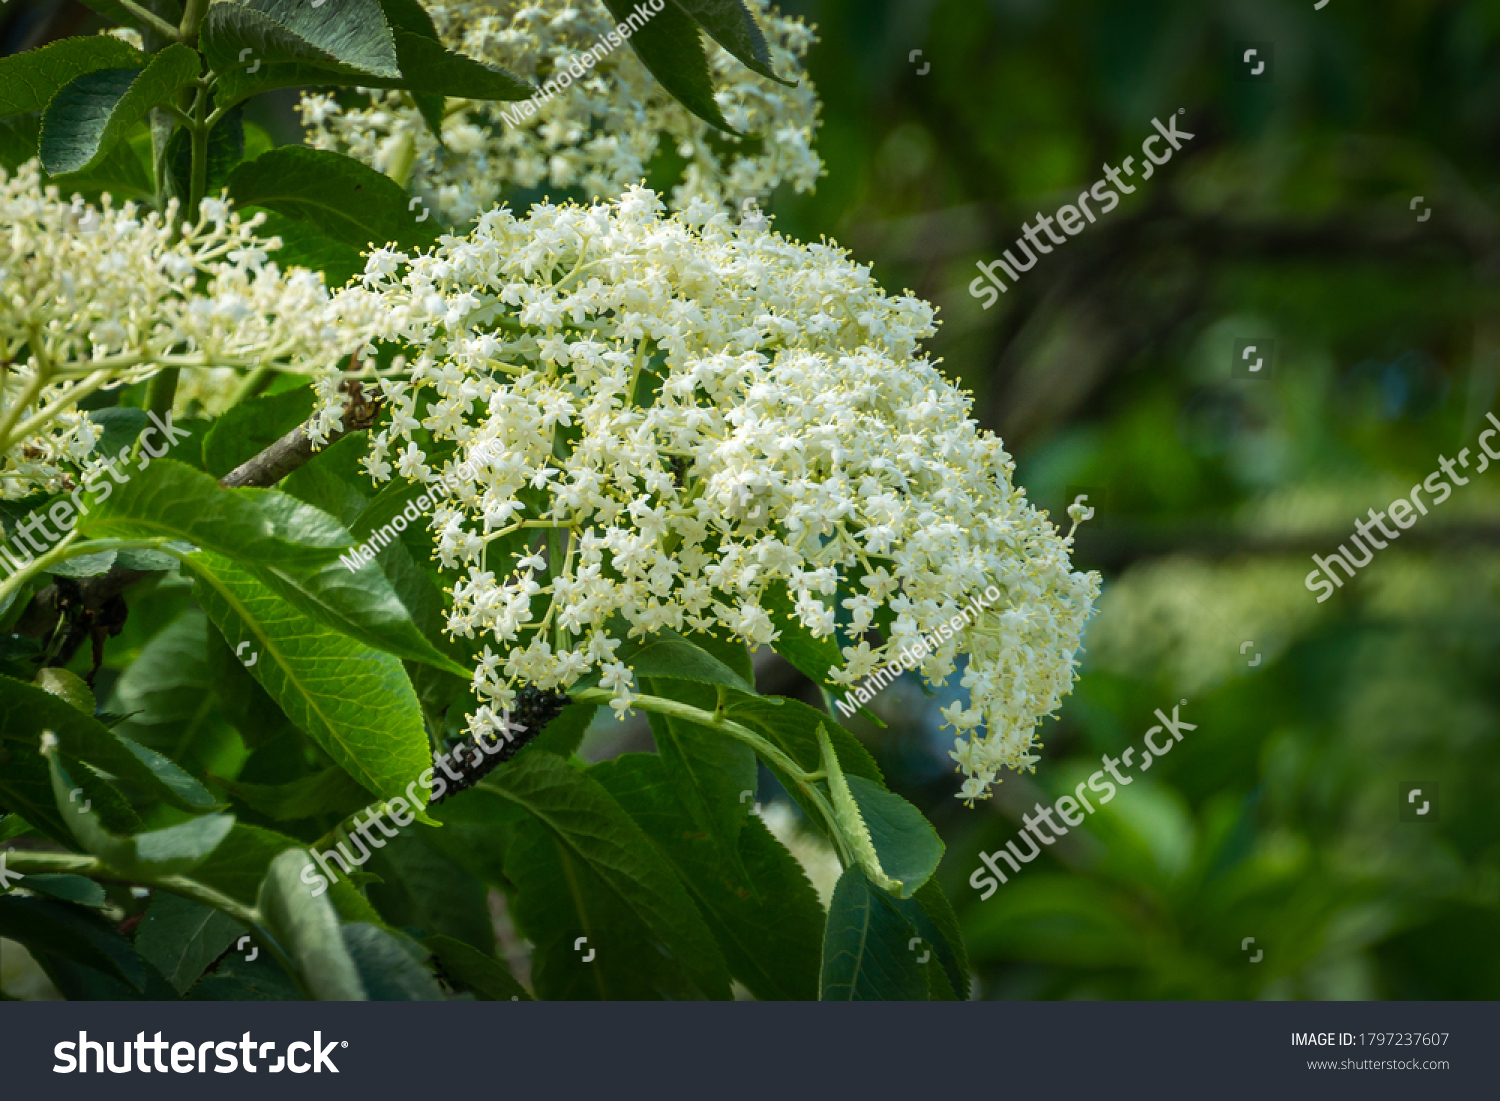 Black sambucus (Sambucus nigra) white flowers blossom. Macro of  delicate flowers cluster on dark green background in spring garden. Selective focus. Nature concept for design. #1797237607